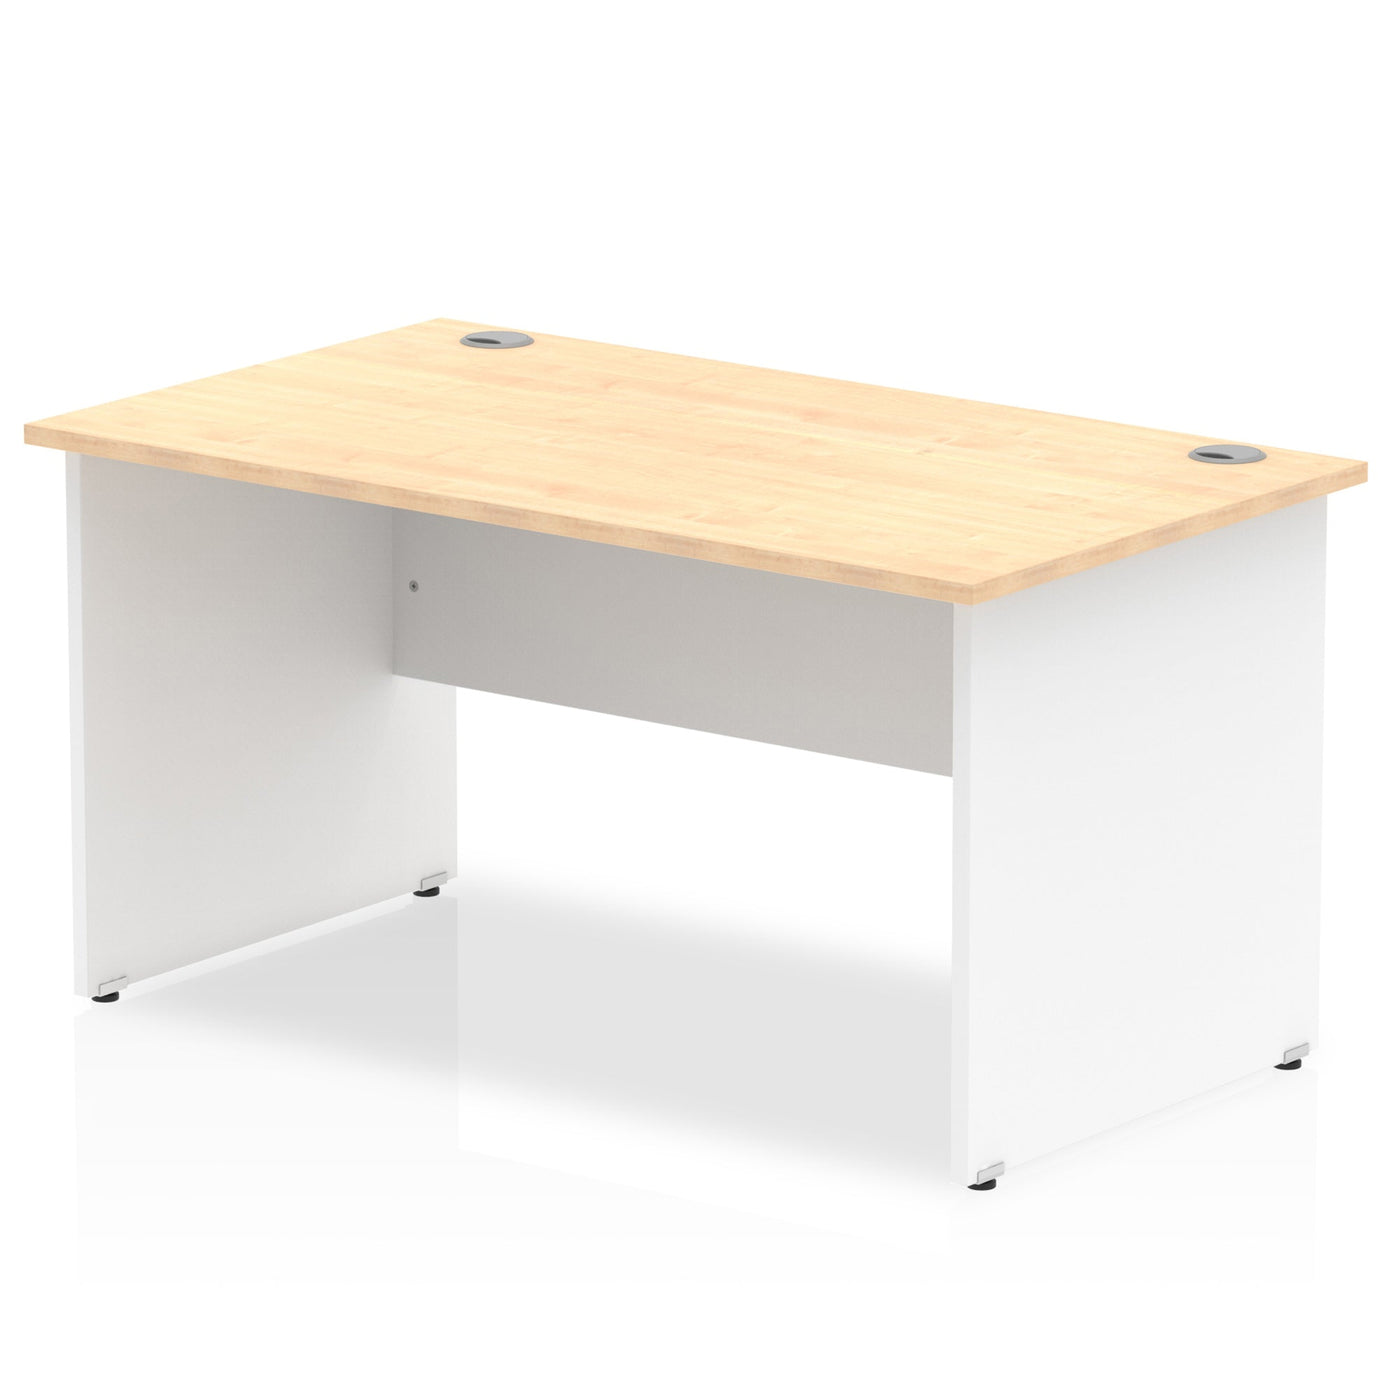 Impulse 1400mm Home Office Desk | Panel End Desk | Home Office Furniture | Homework Desk | Work From Home Desk | Wooden Desk